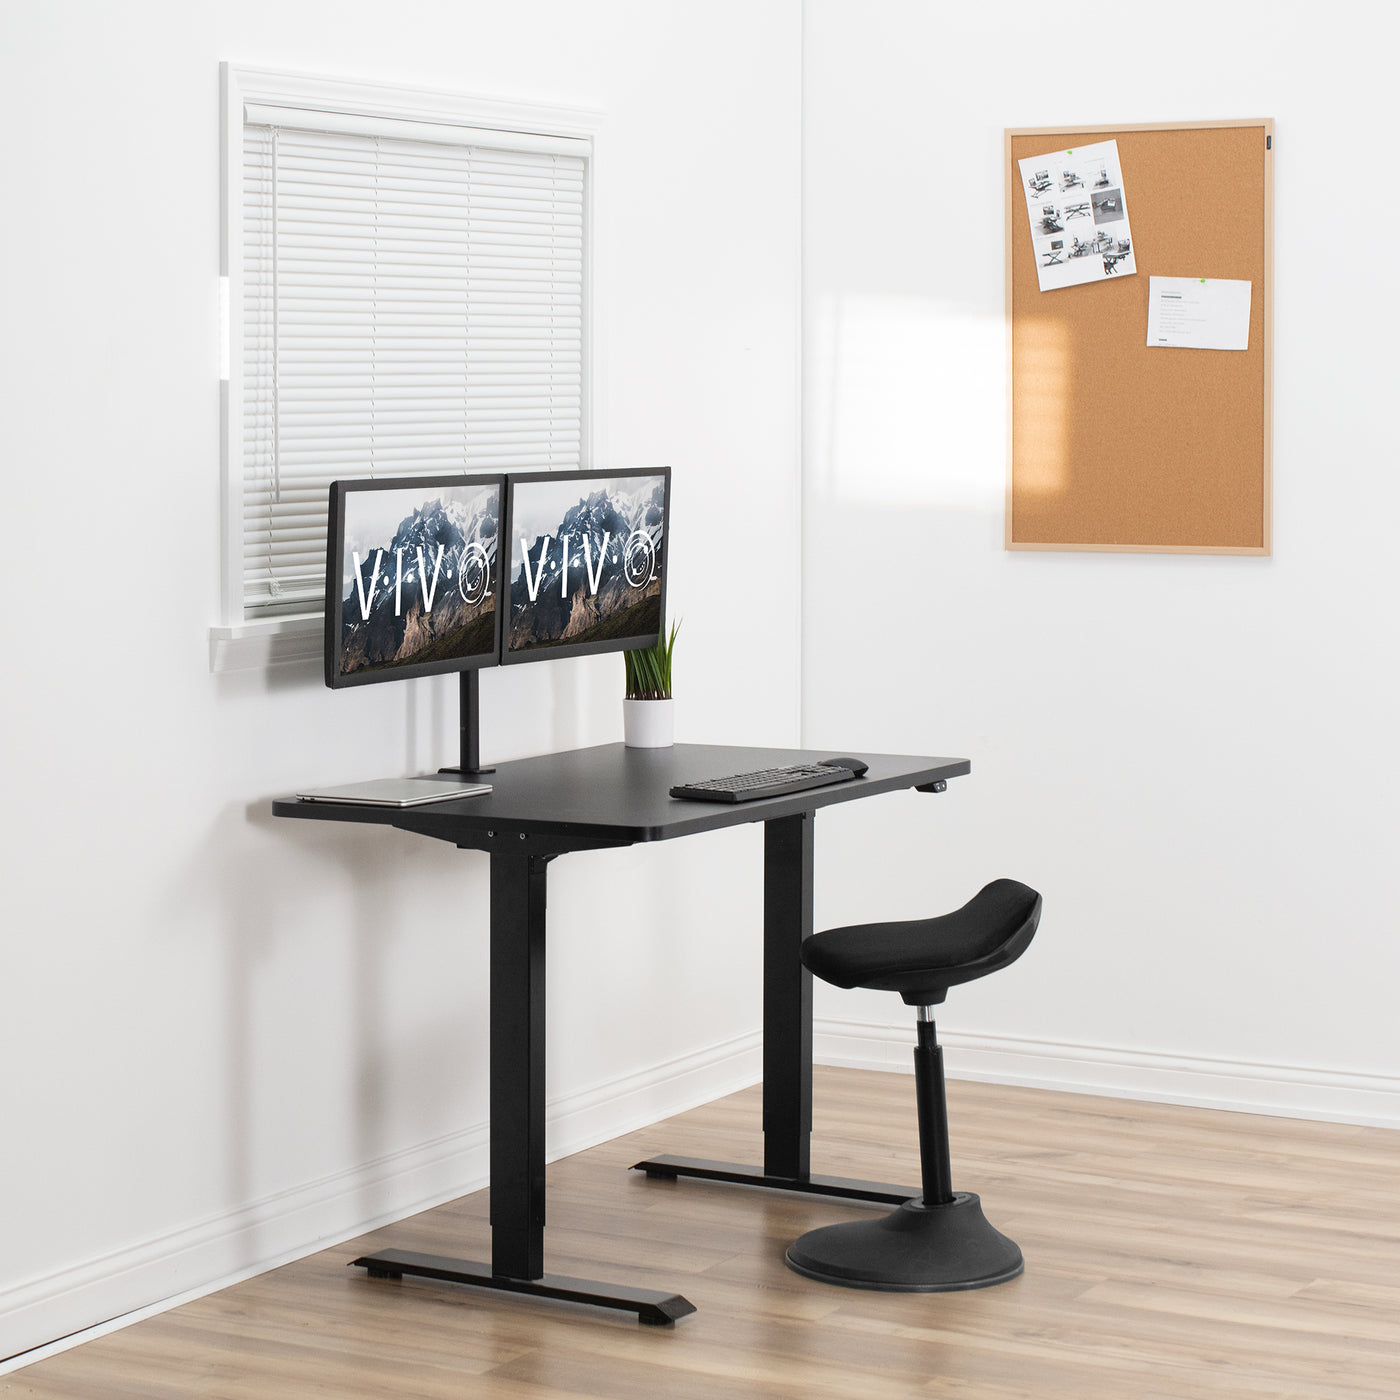 Medium sized rectangle desktop with dual monitor mount.